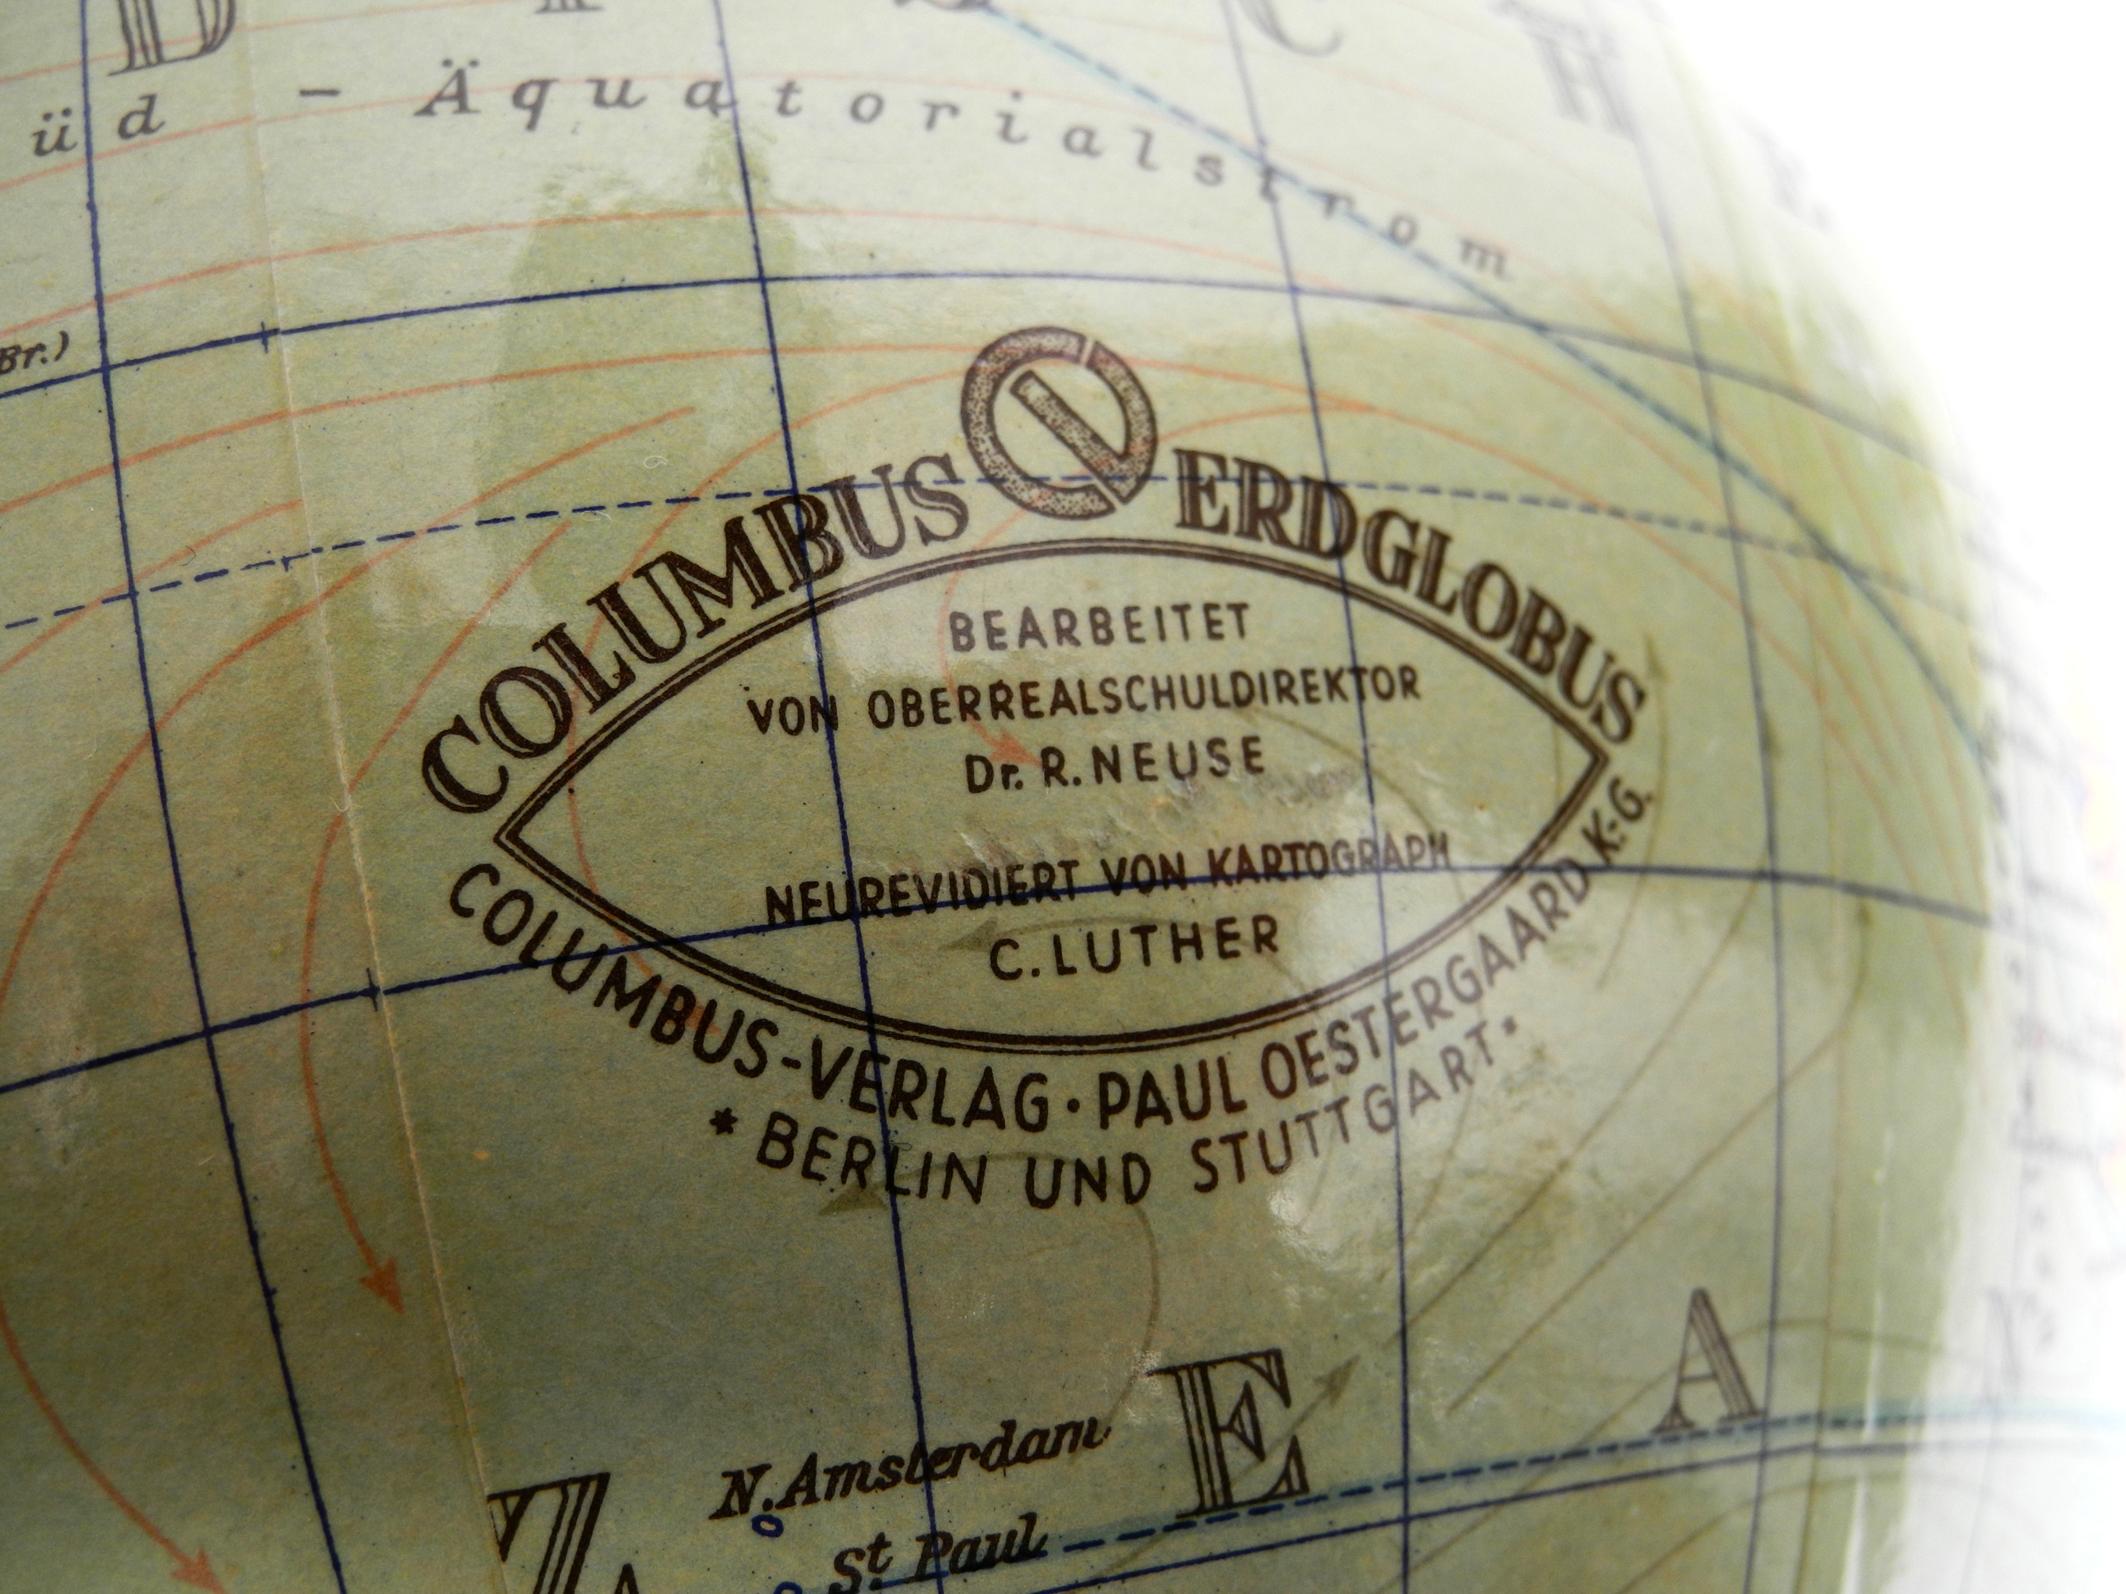 Mid Century Modern Columbus Earth globe by Columbus Verlag Paul Oestergaard  For Sale 1